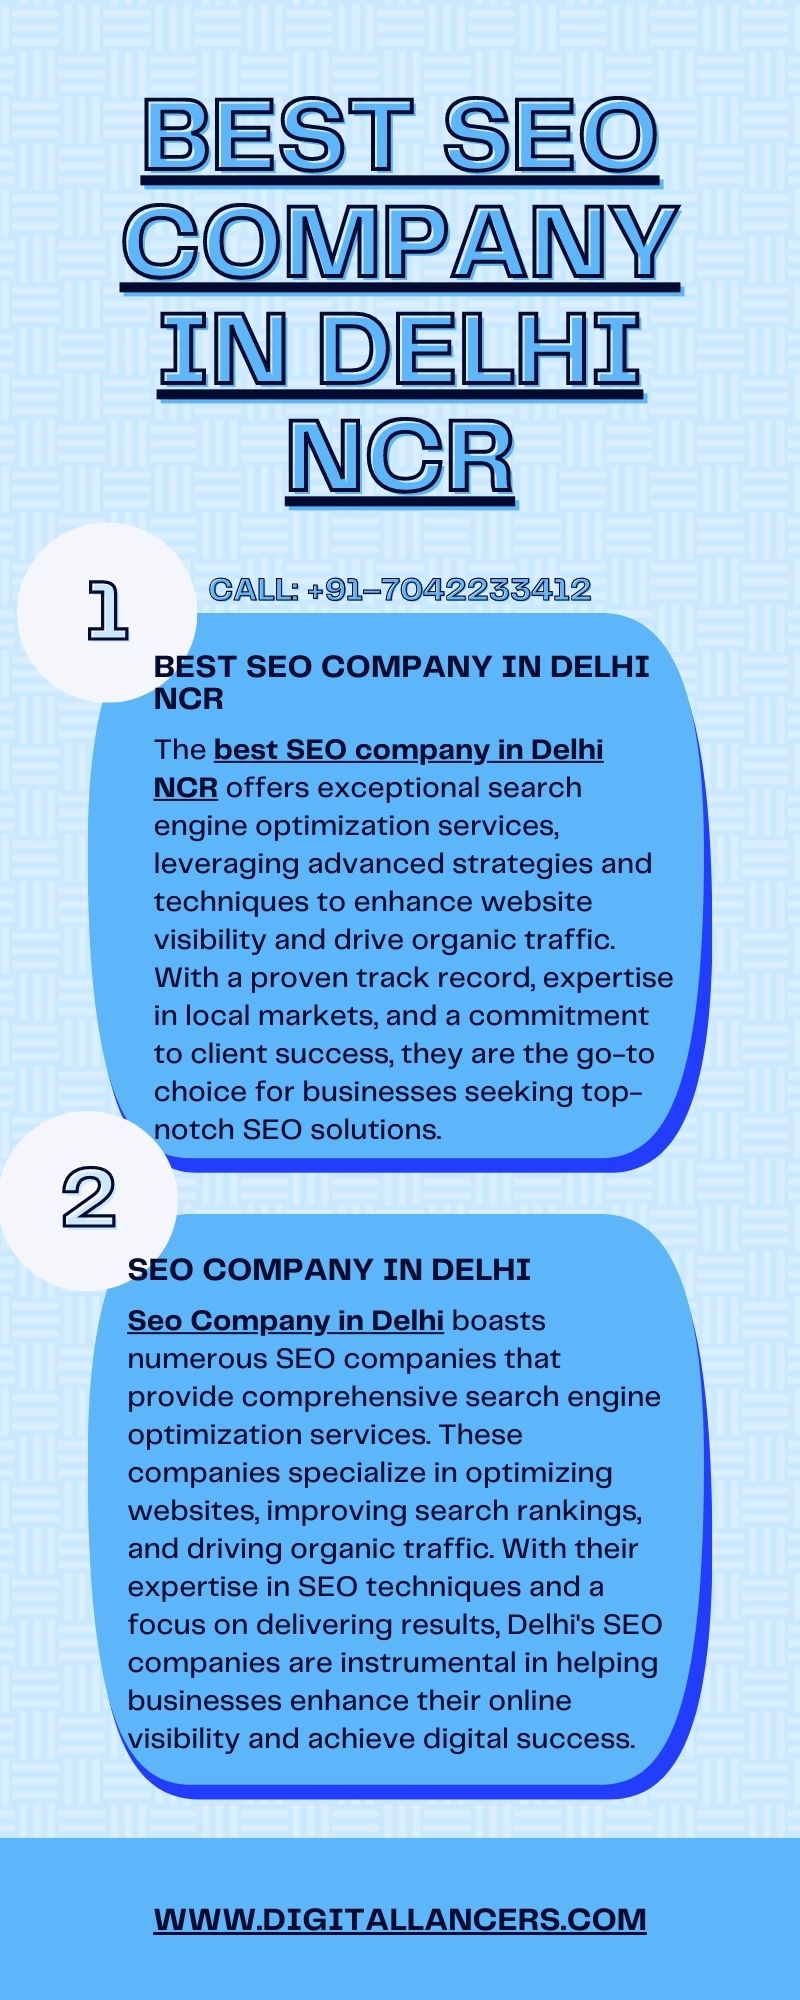 best seo company in delhi ncr.jpg